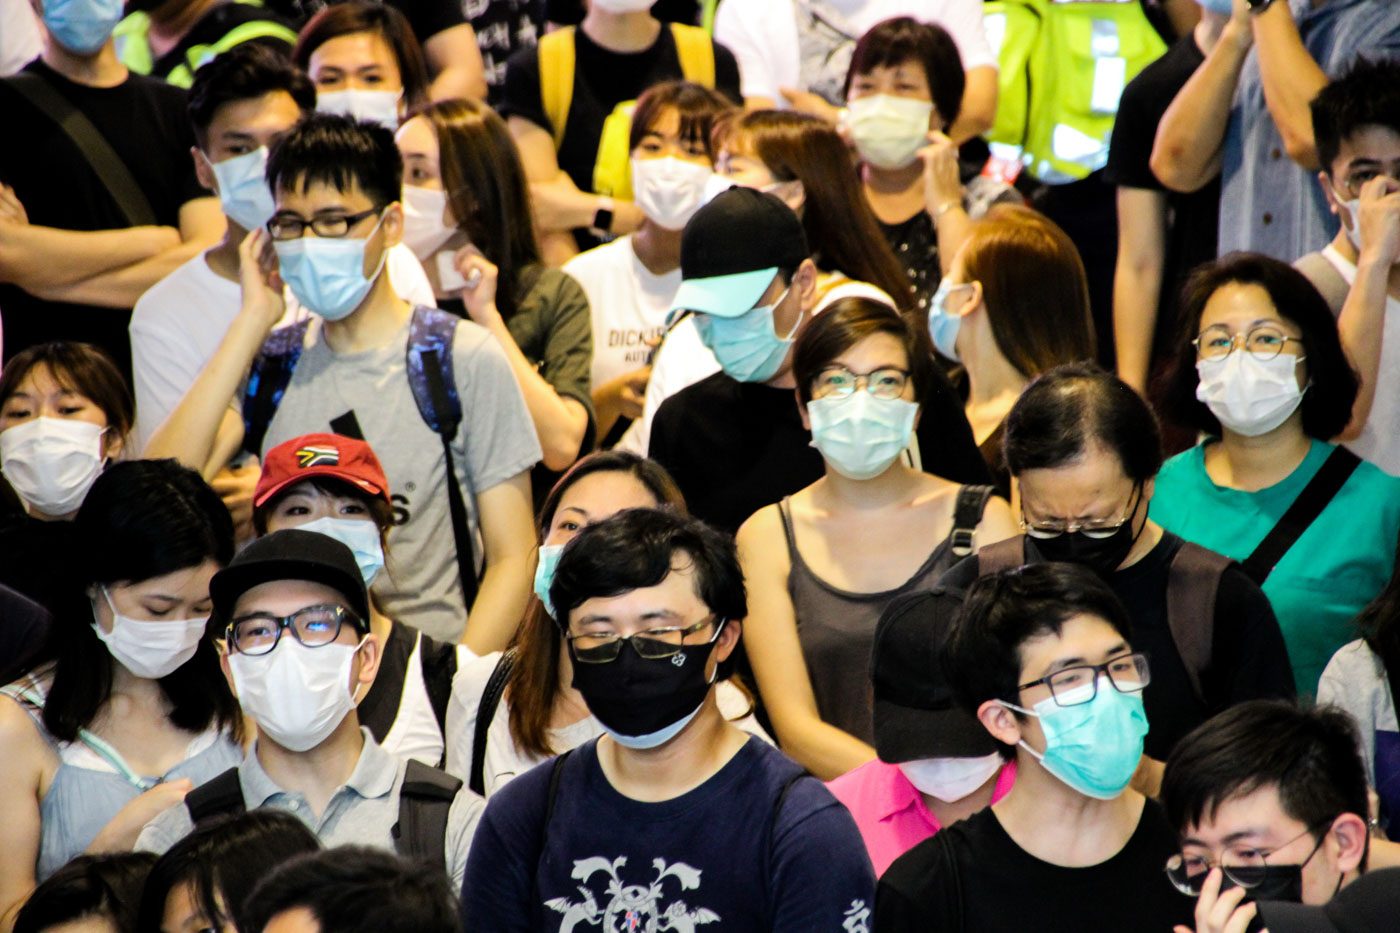 U.S. revocation on Hong Kong: Big symbolism, less certain effect